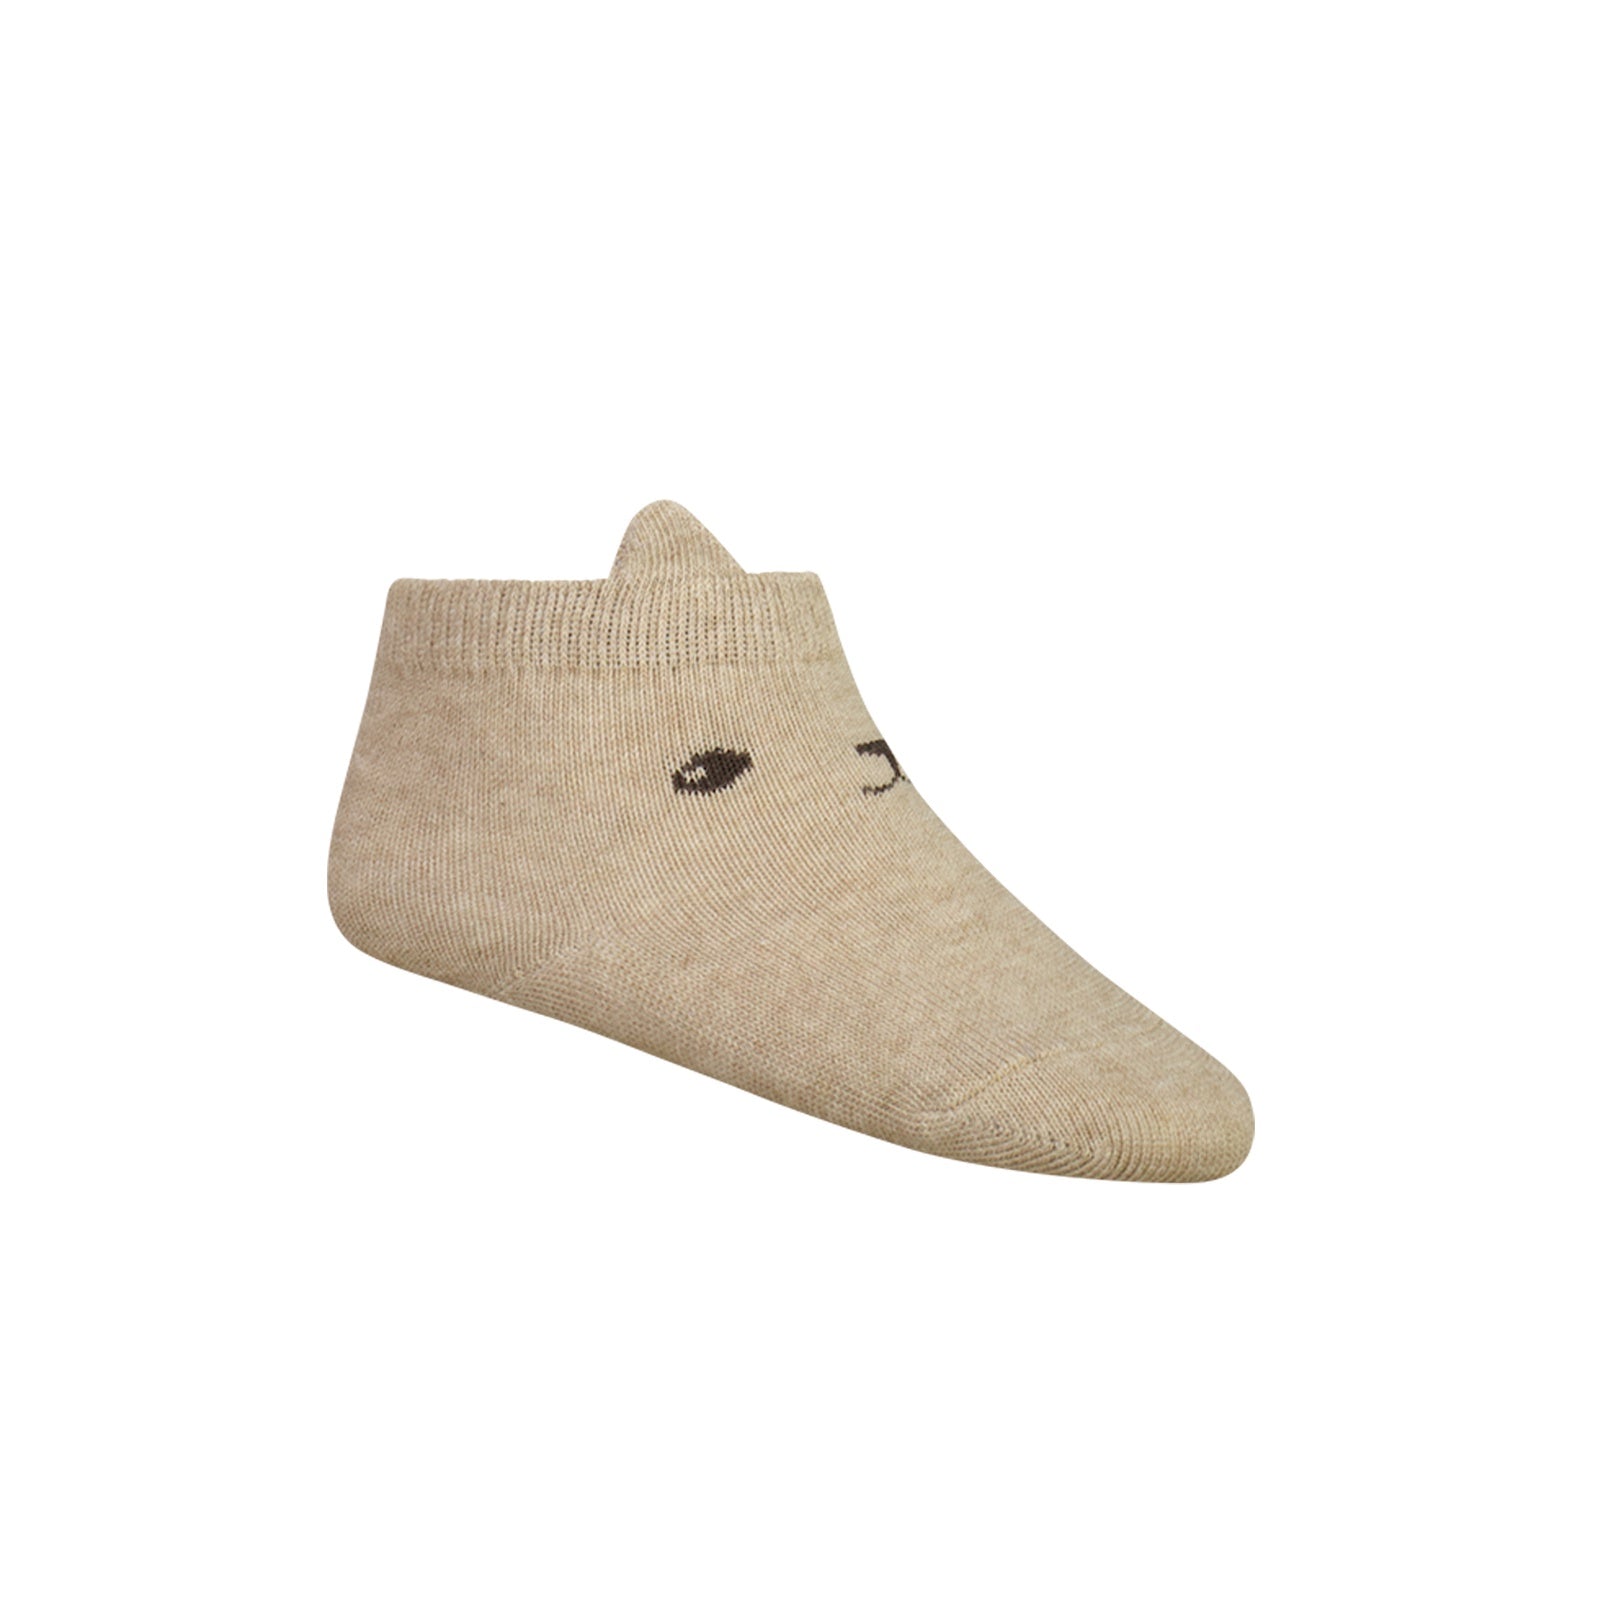 George Bear Ankle Sock - Lait Marle